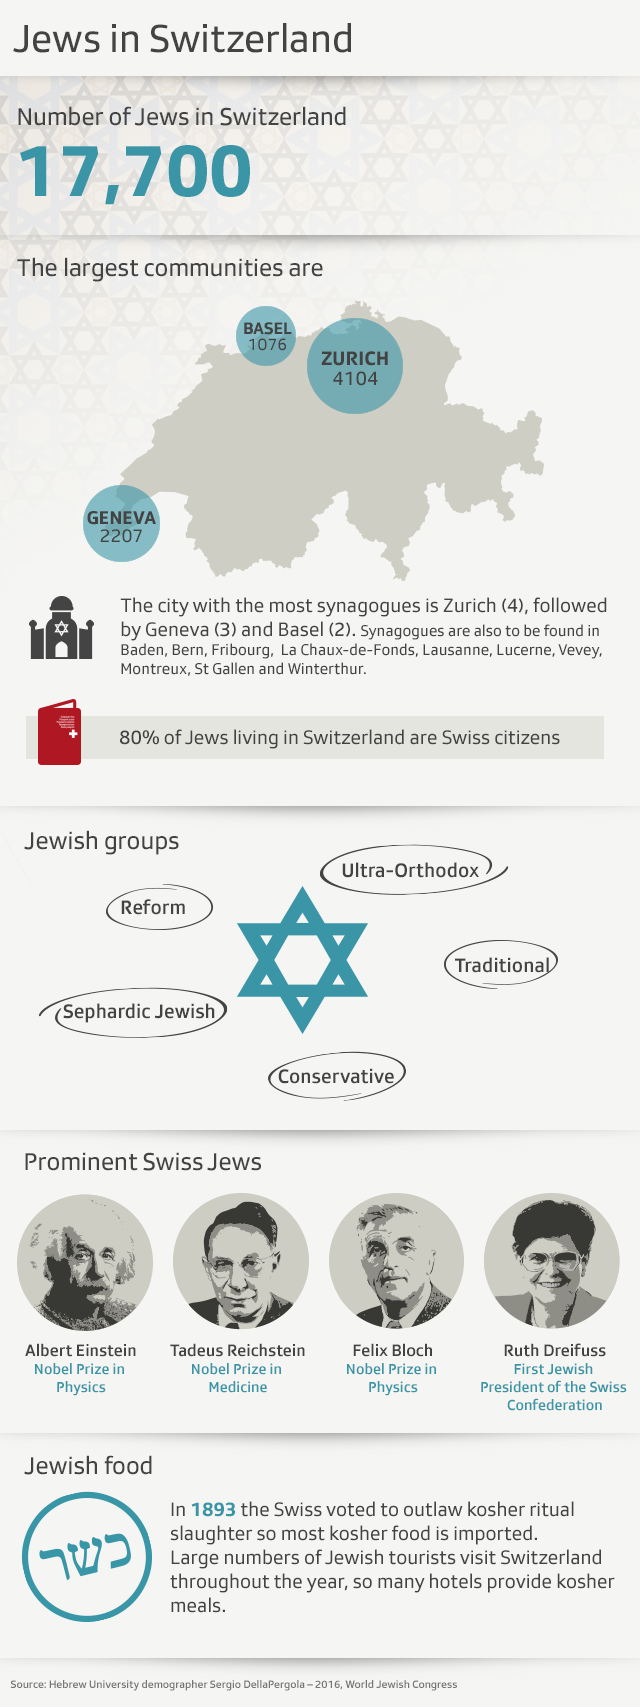 Jews living in Switzerland